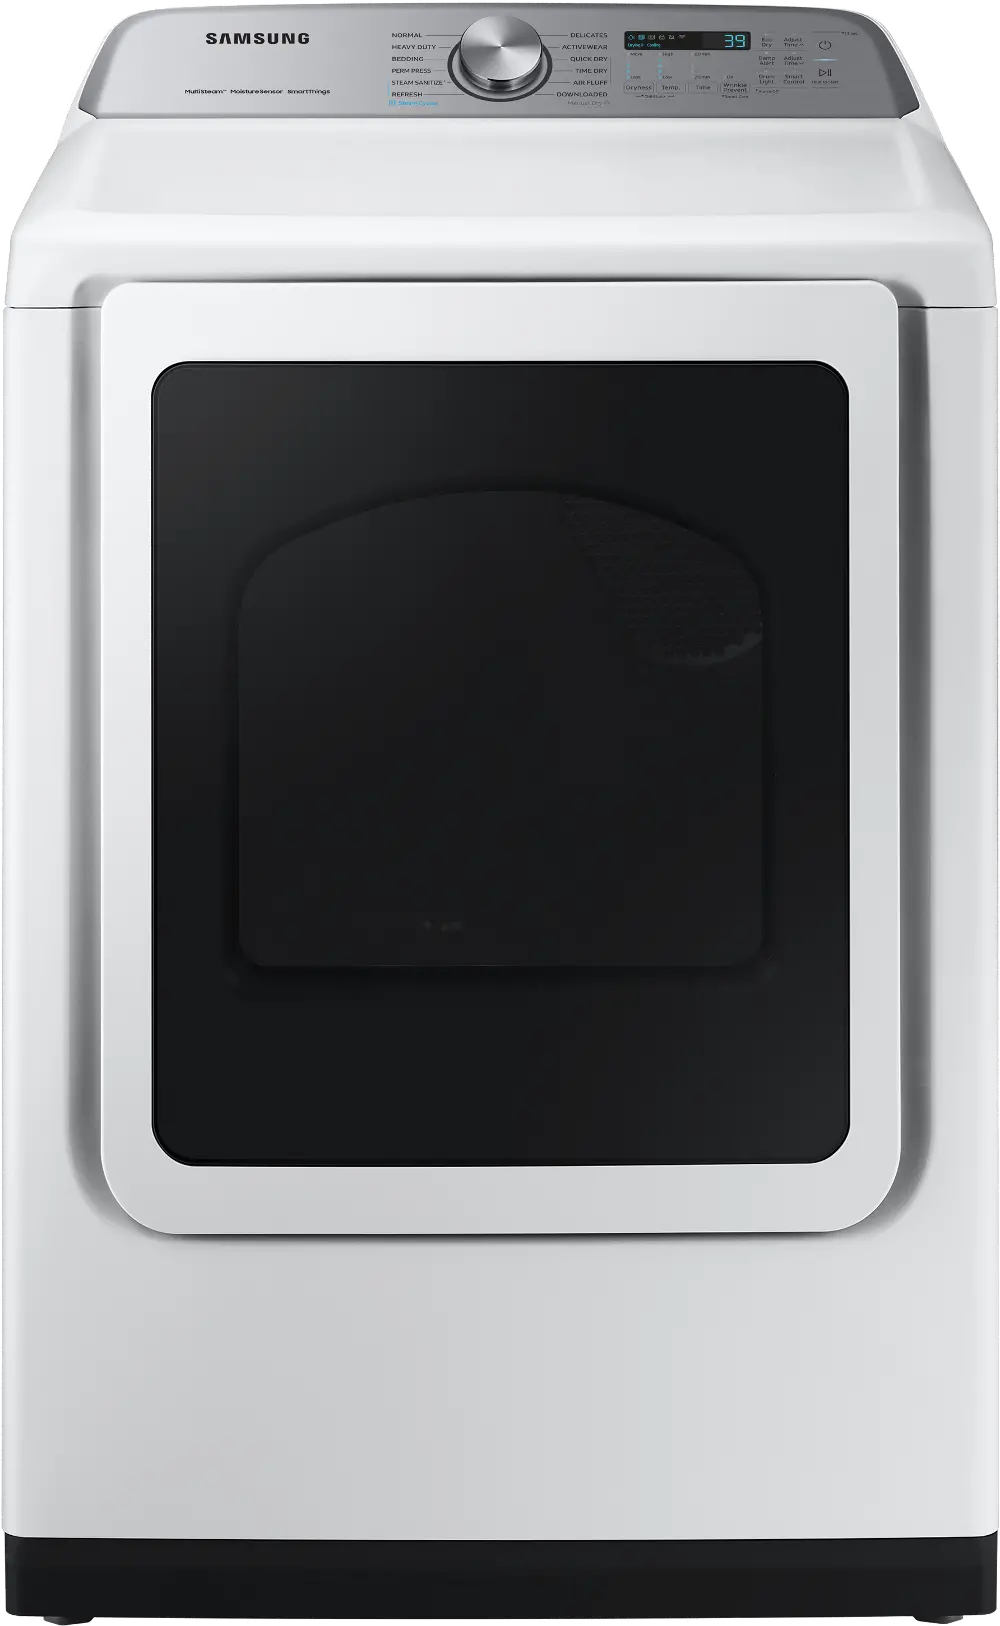 DVE52A5500W Samsung Electric Dryer - White, 52A5500-1